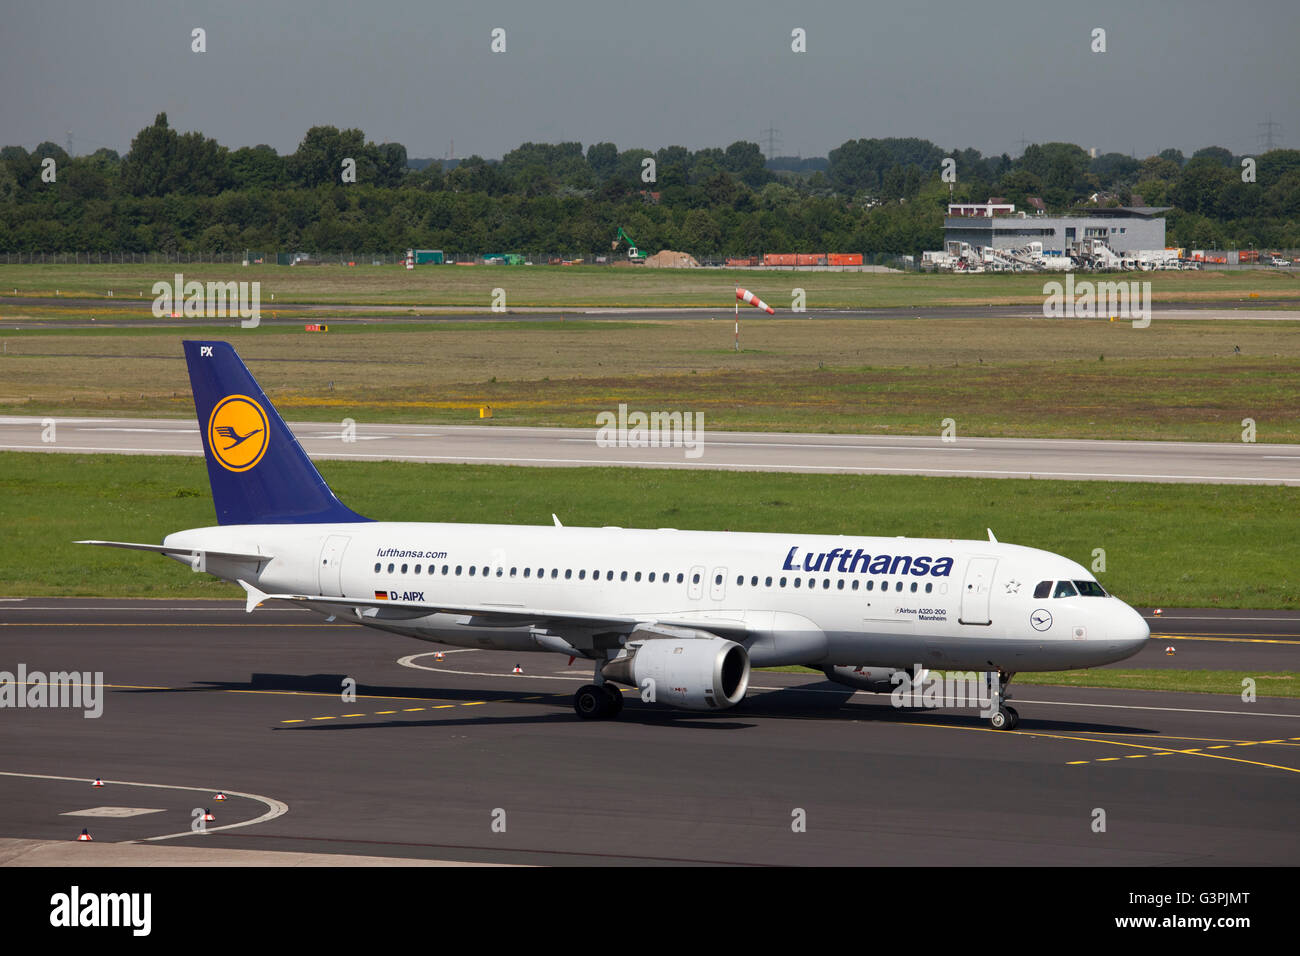 Lufthansa, aeromobili Airbus A320-200 di Mannheim, l'asfalto, pista, Duesseldorf Airport, regione renana Foto Stock